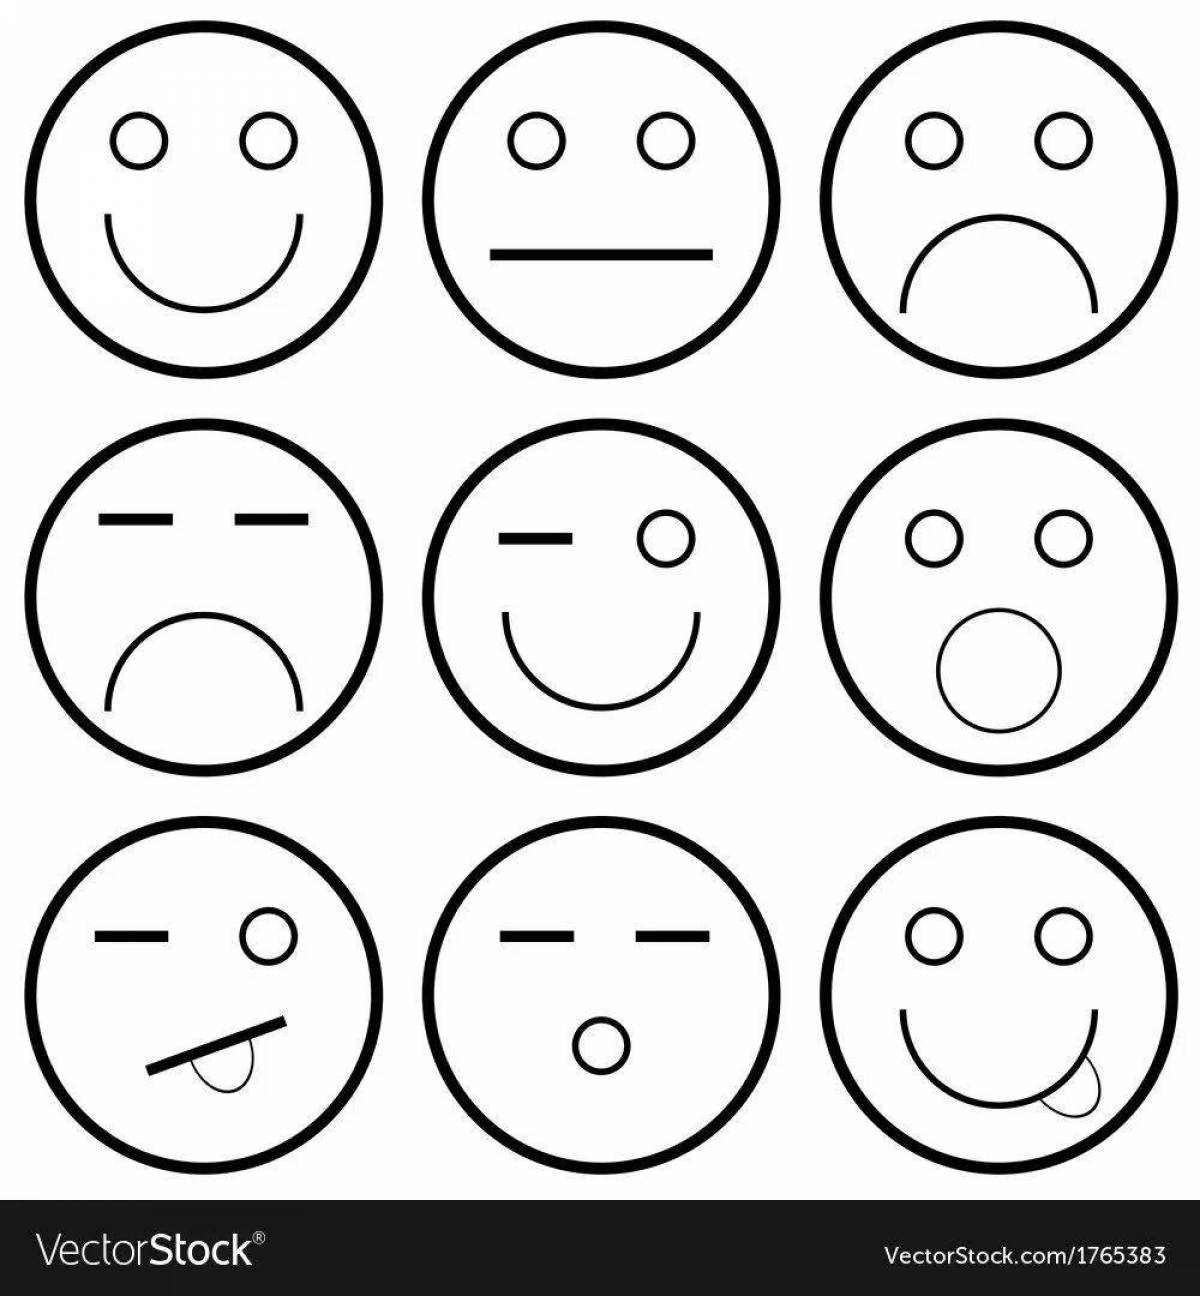 Amazing emoji coloring page